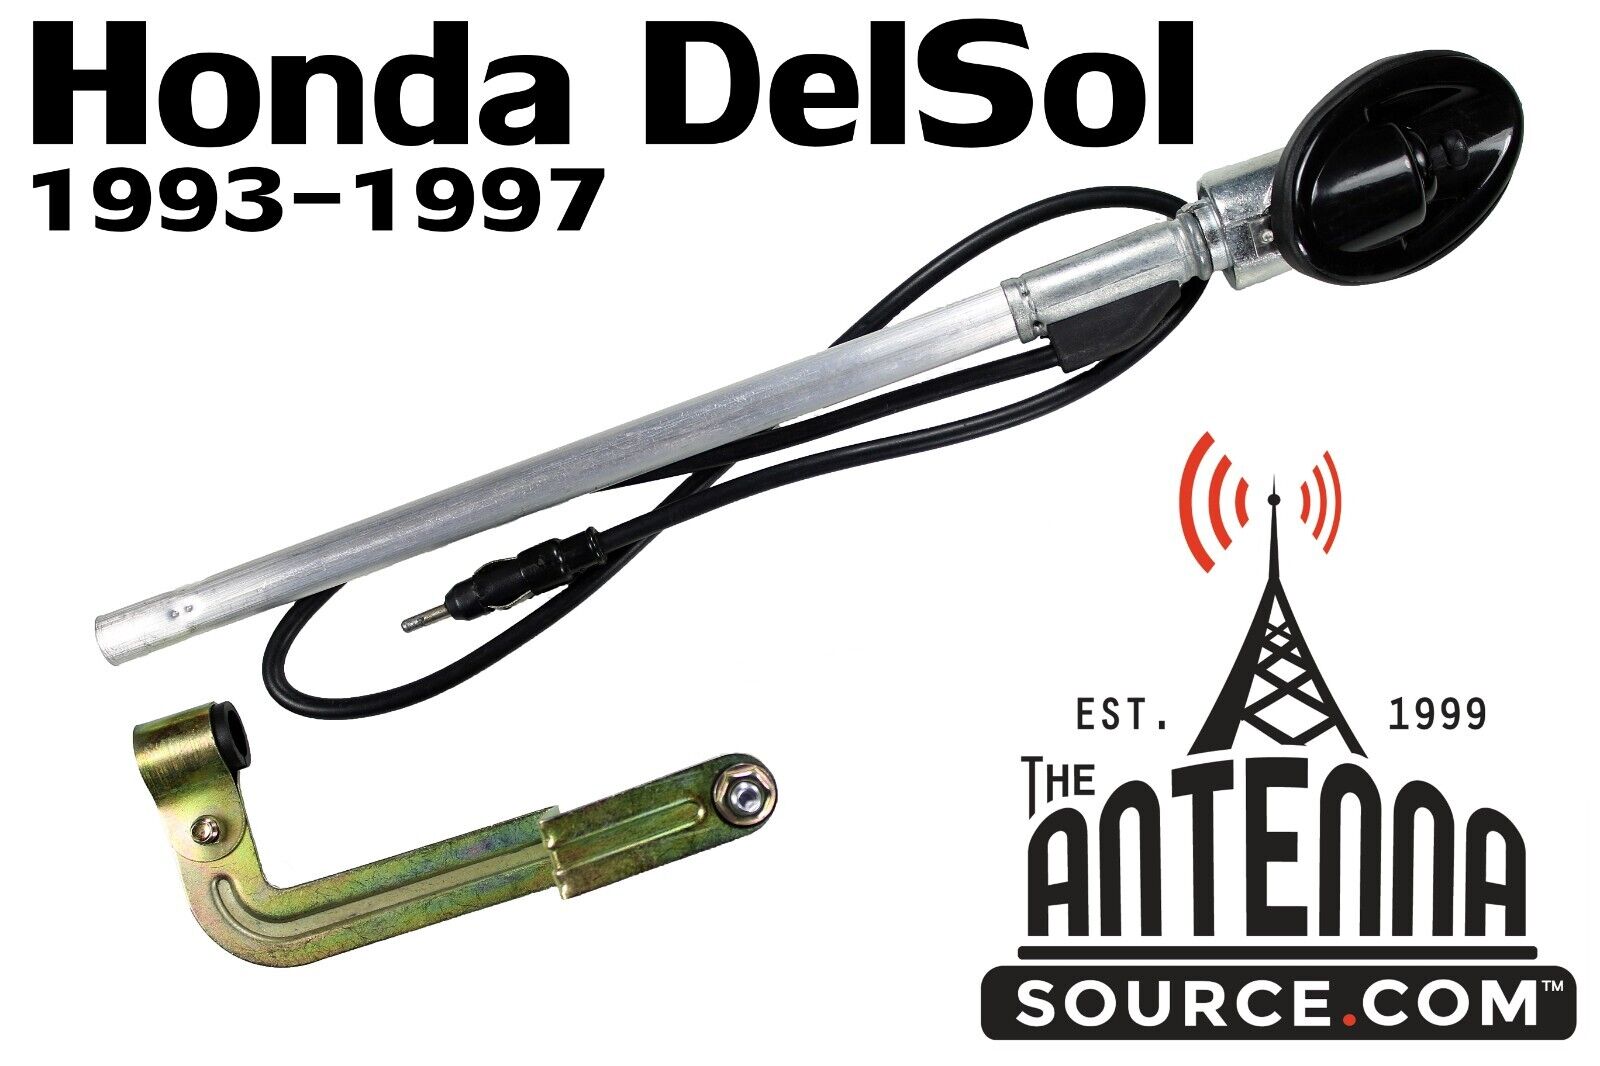 MANUAL ANTENNA KIT - Fits: 1993-1997 Honda Del Sol